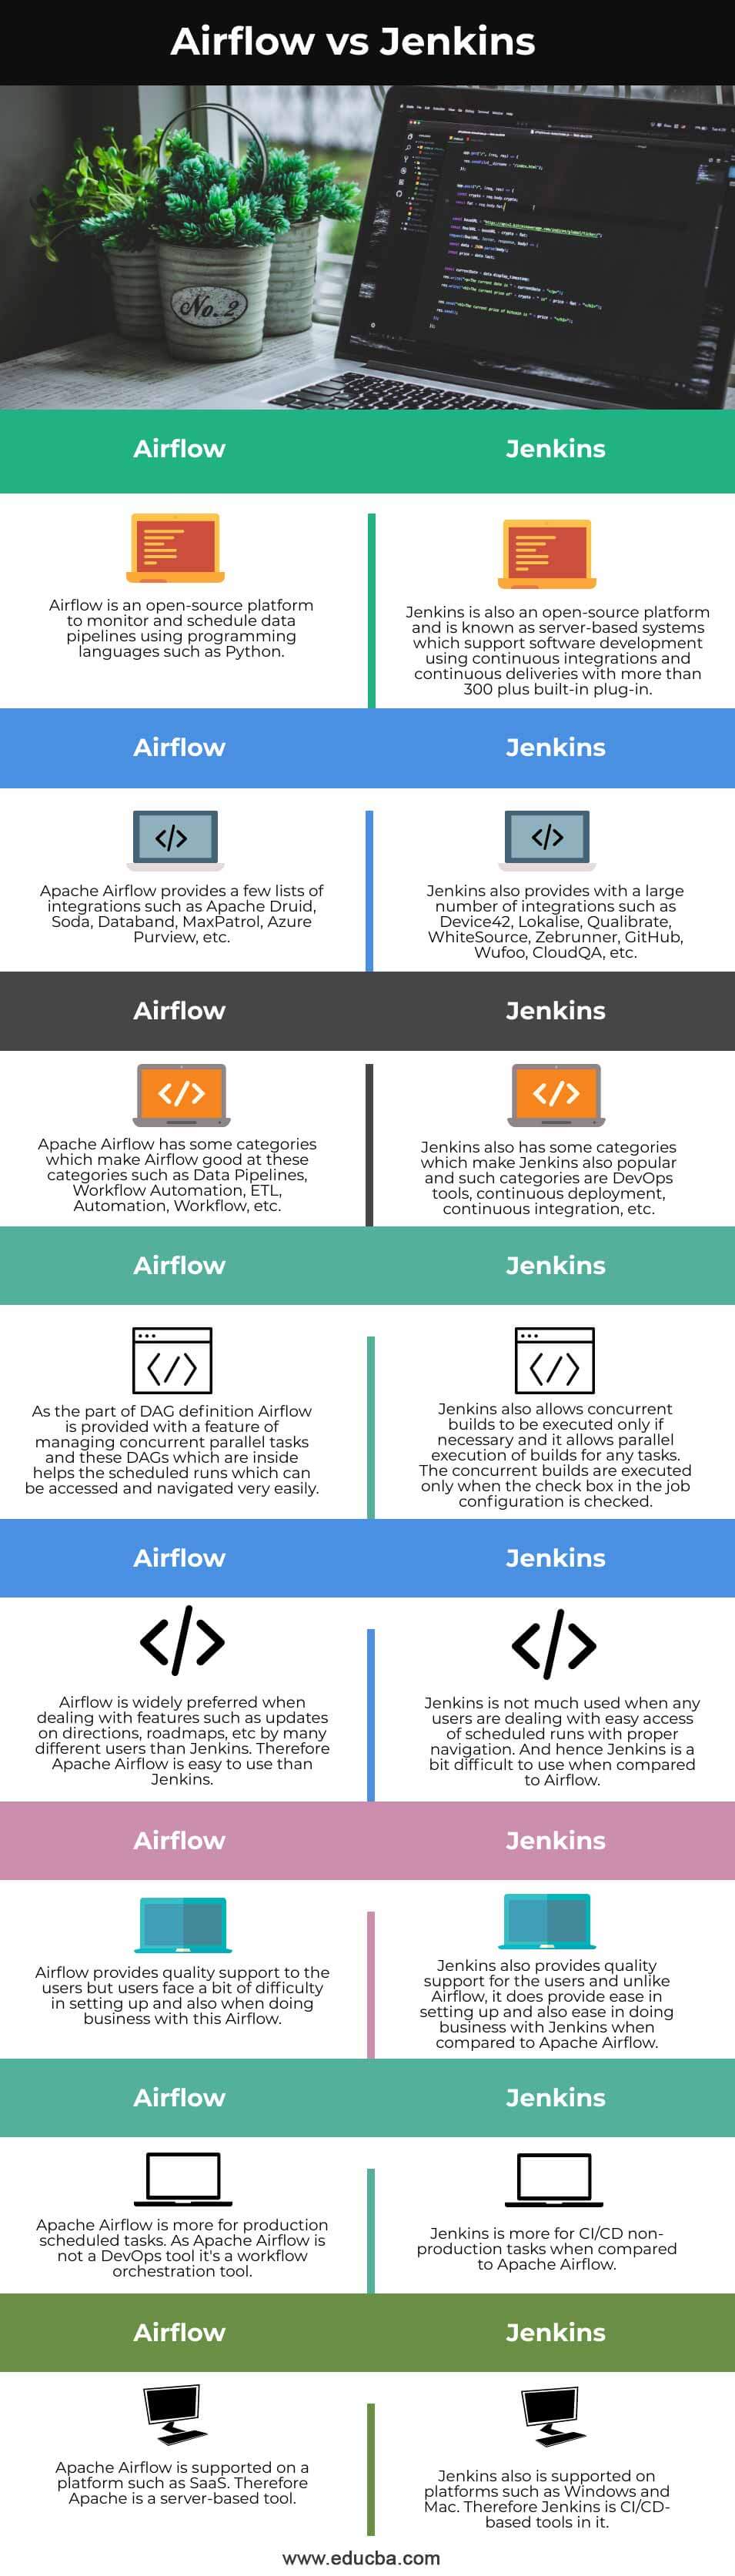 Airflow-vs-Jenkins-info